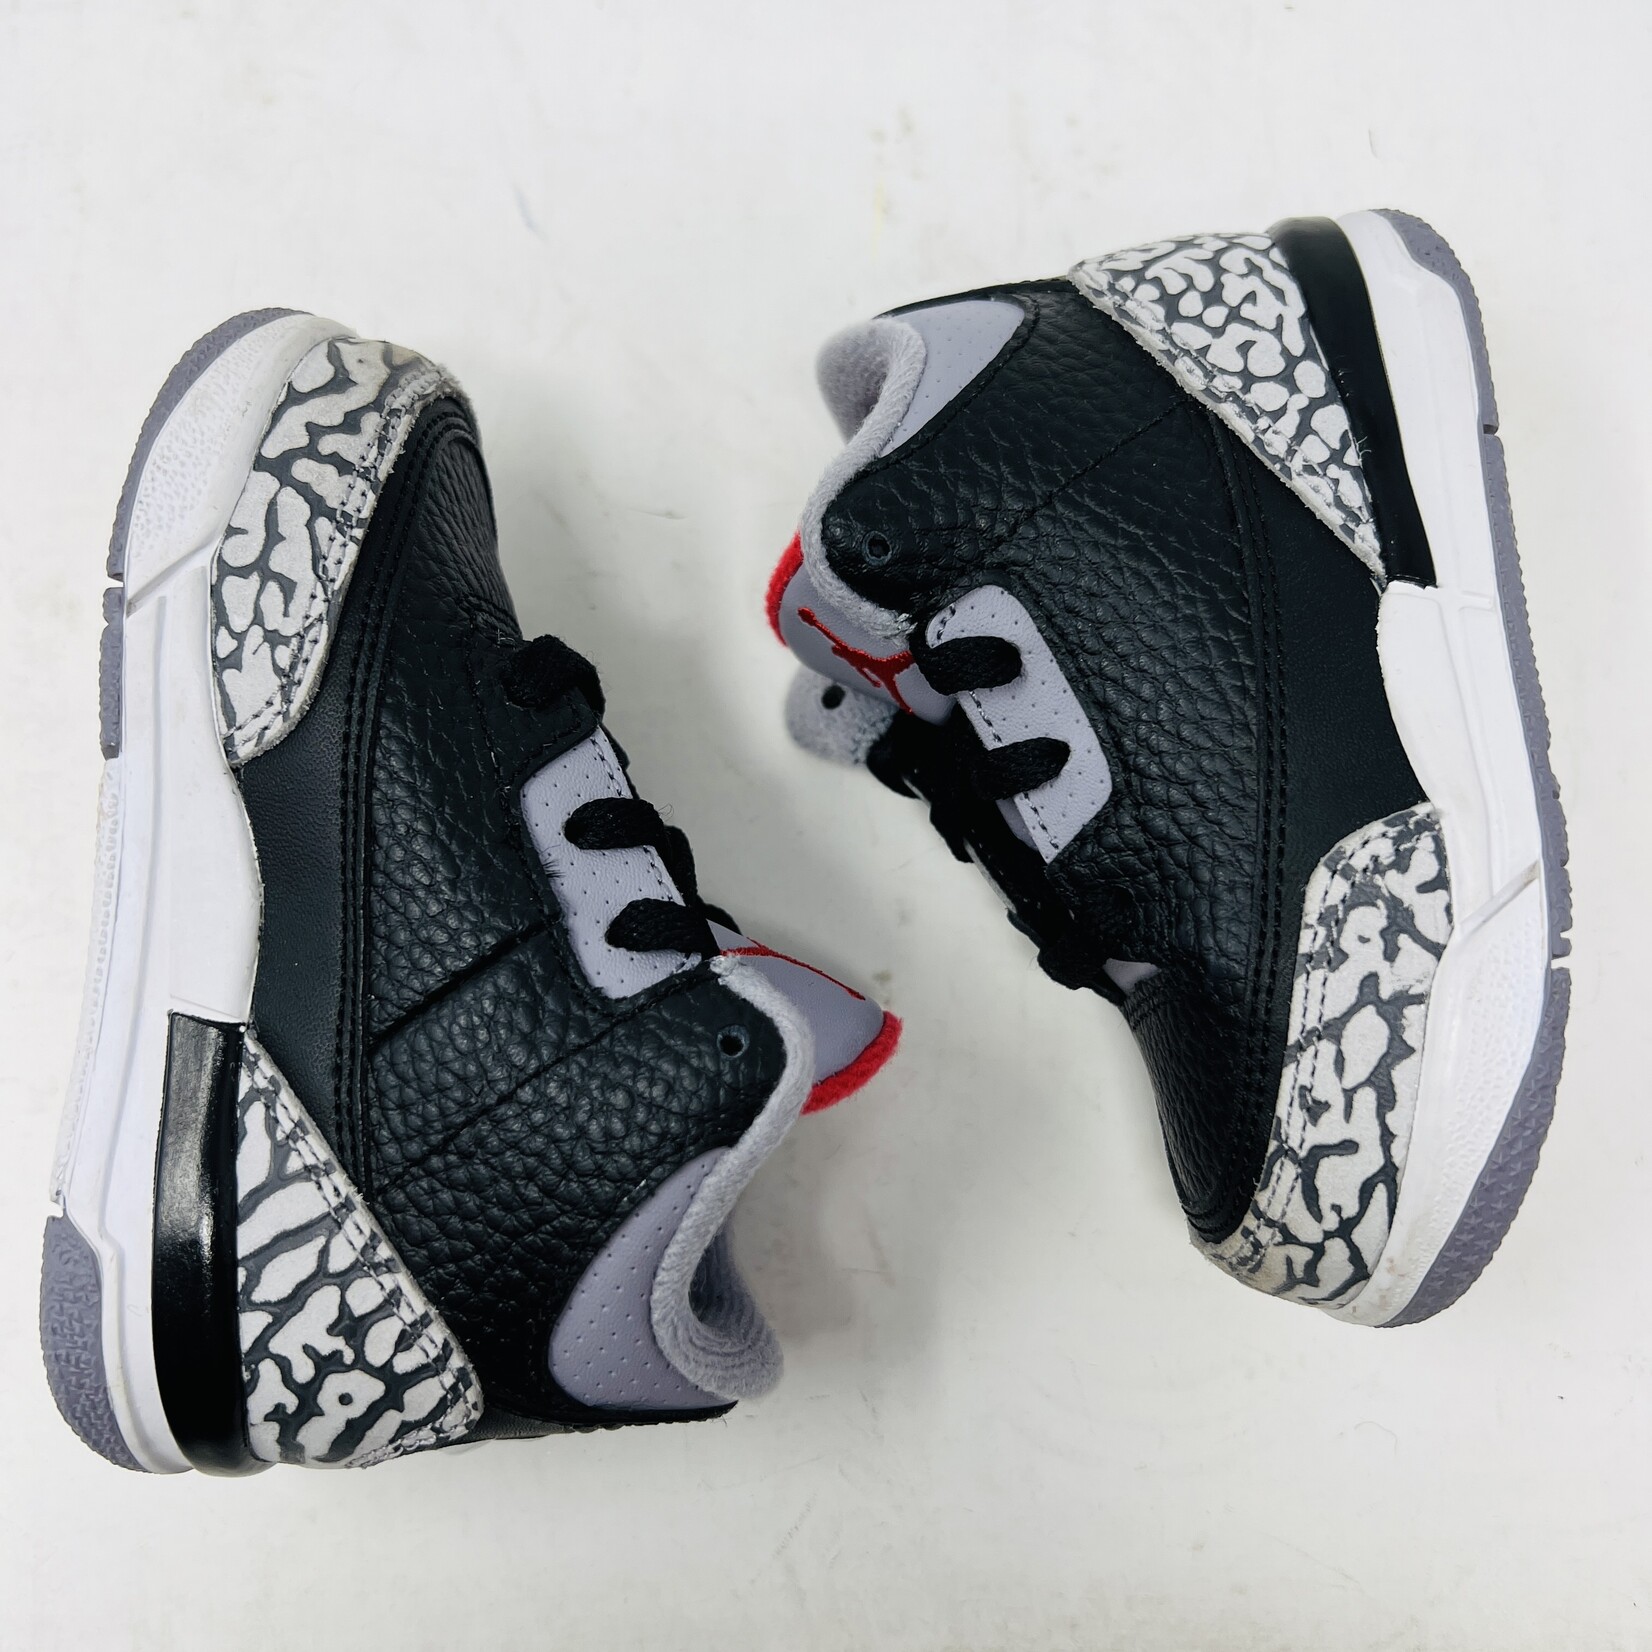 Jordan Jordan 3 Retro Black Cement (2018) (TD)